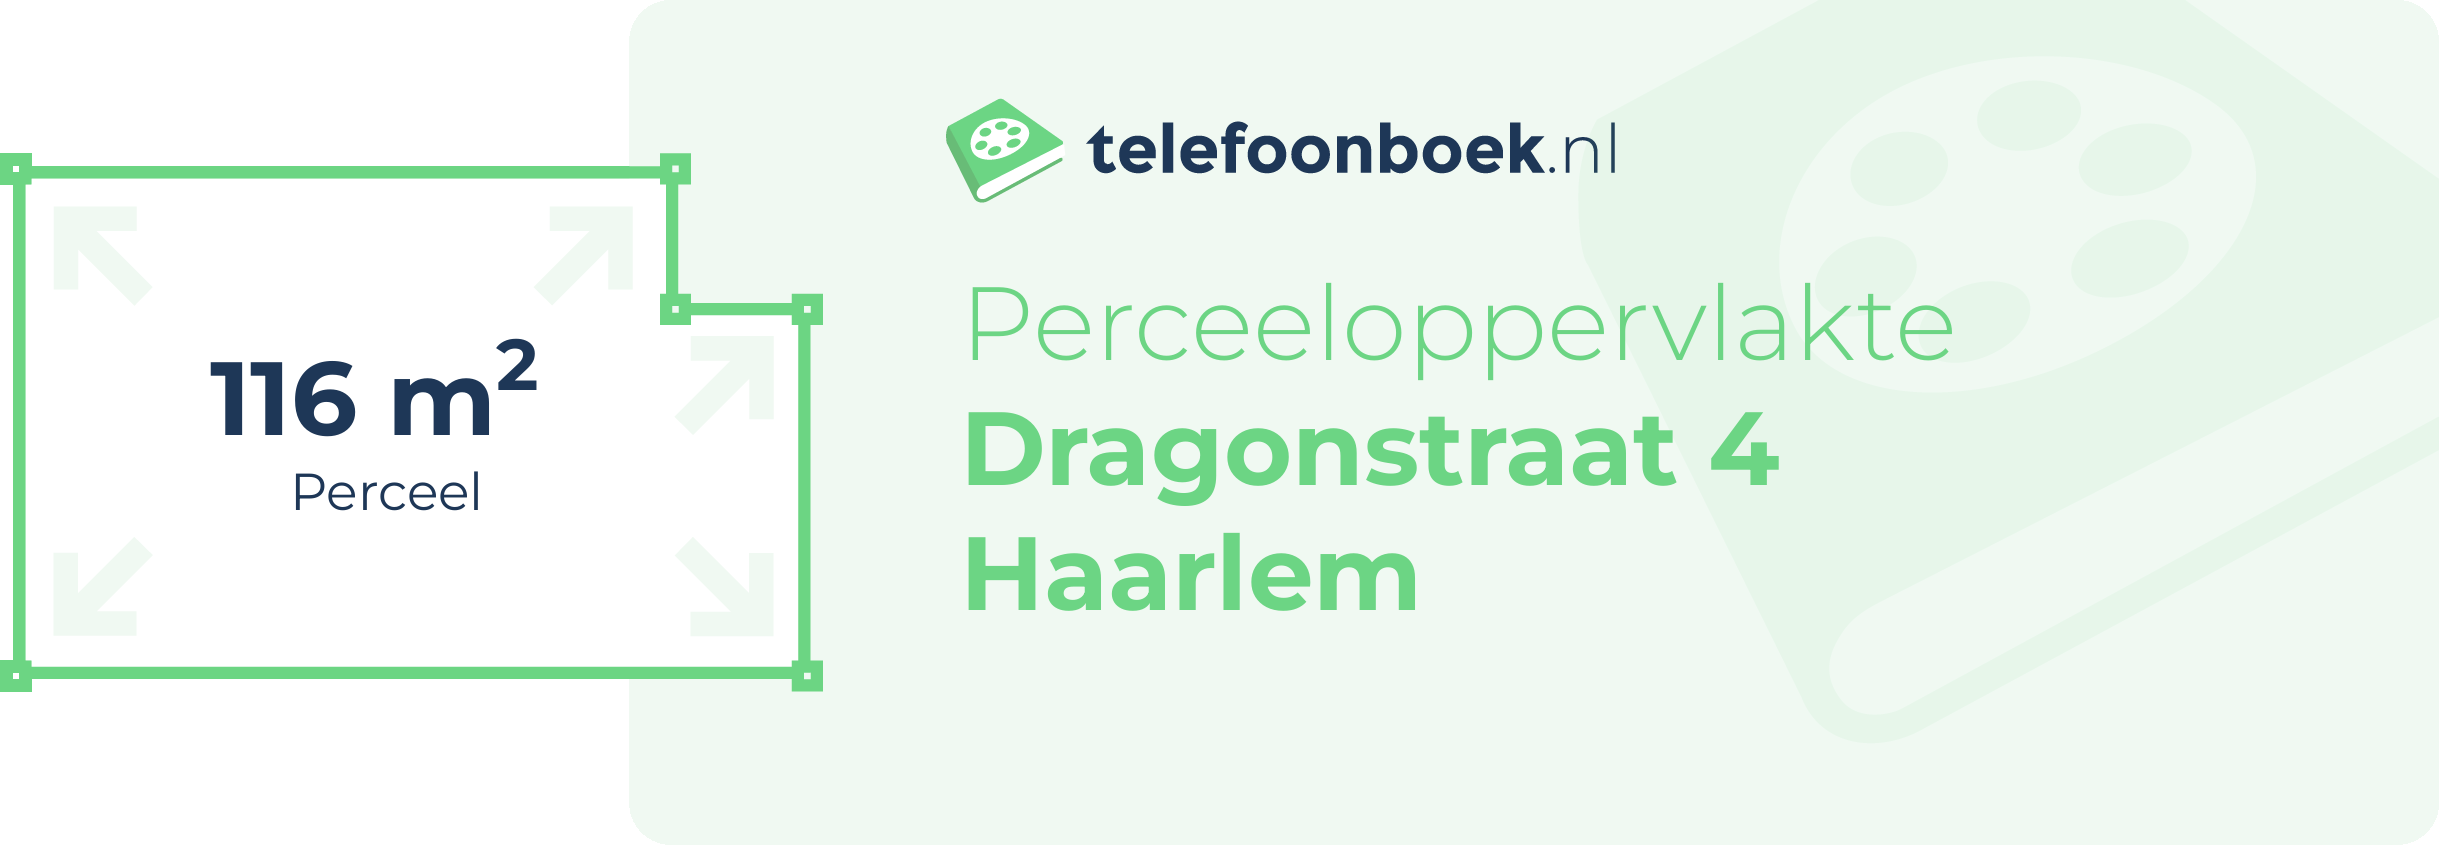 Perceeloppervlakte Dragonstraat 4 Haarlem